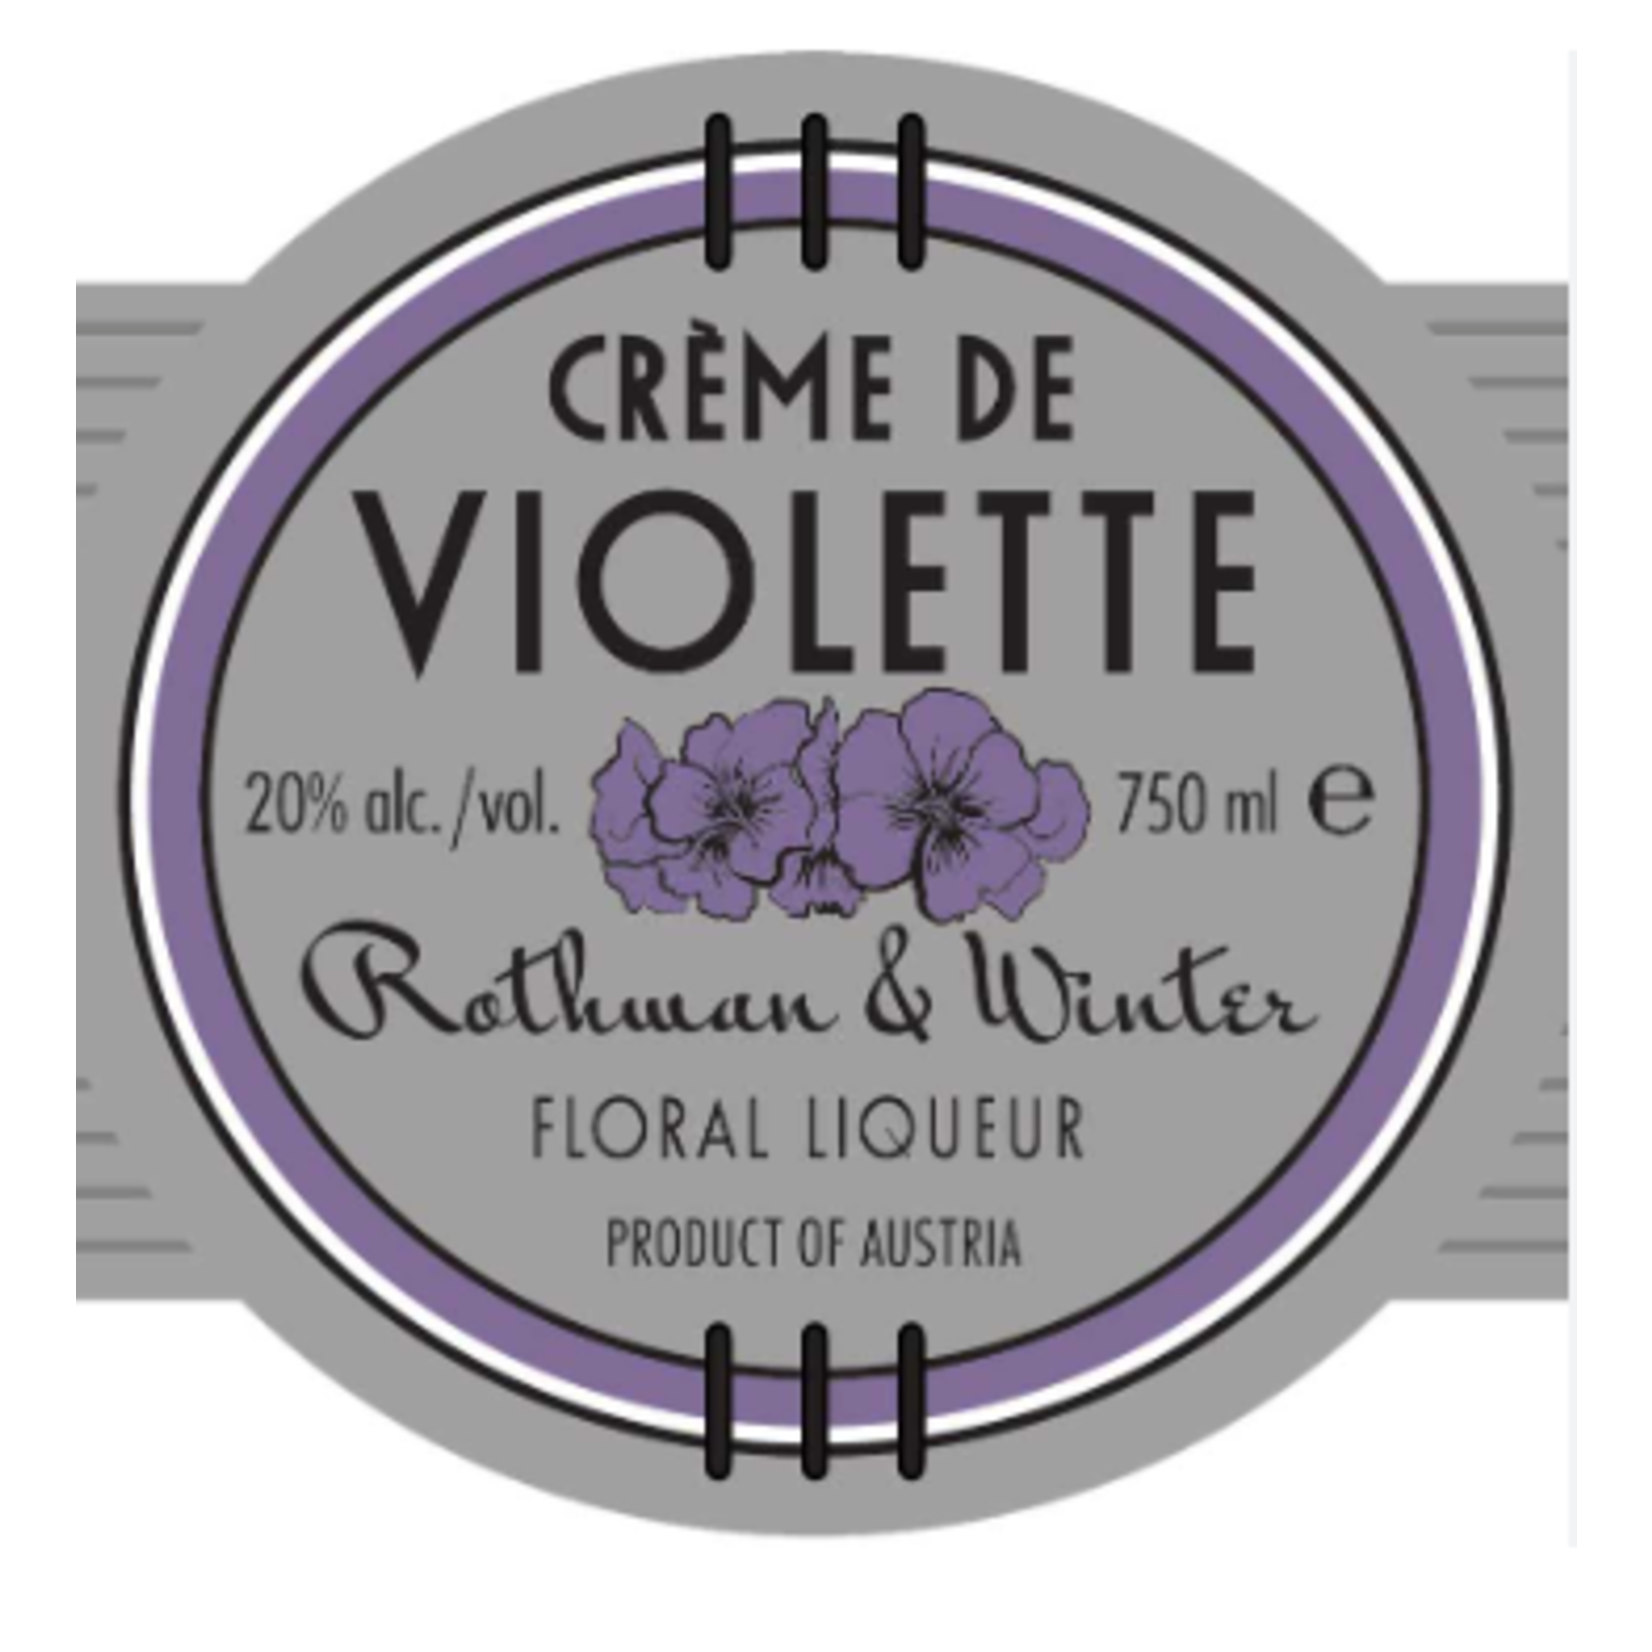 cream De Creme De Violette Rothman & Winter